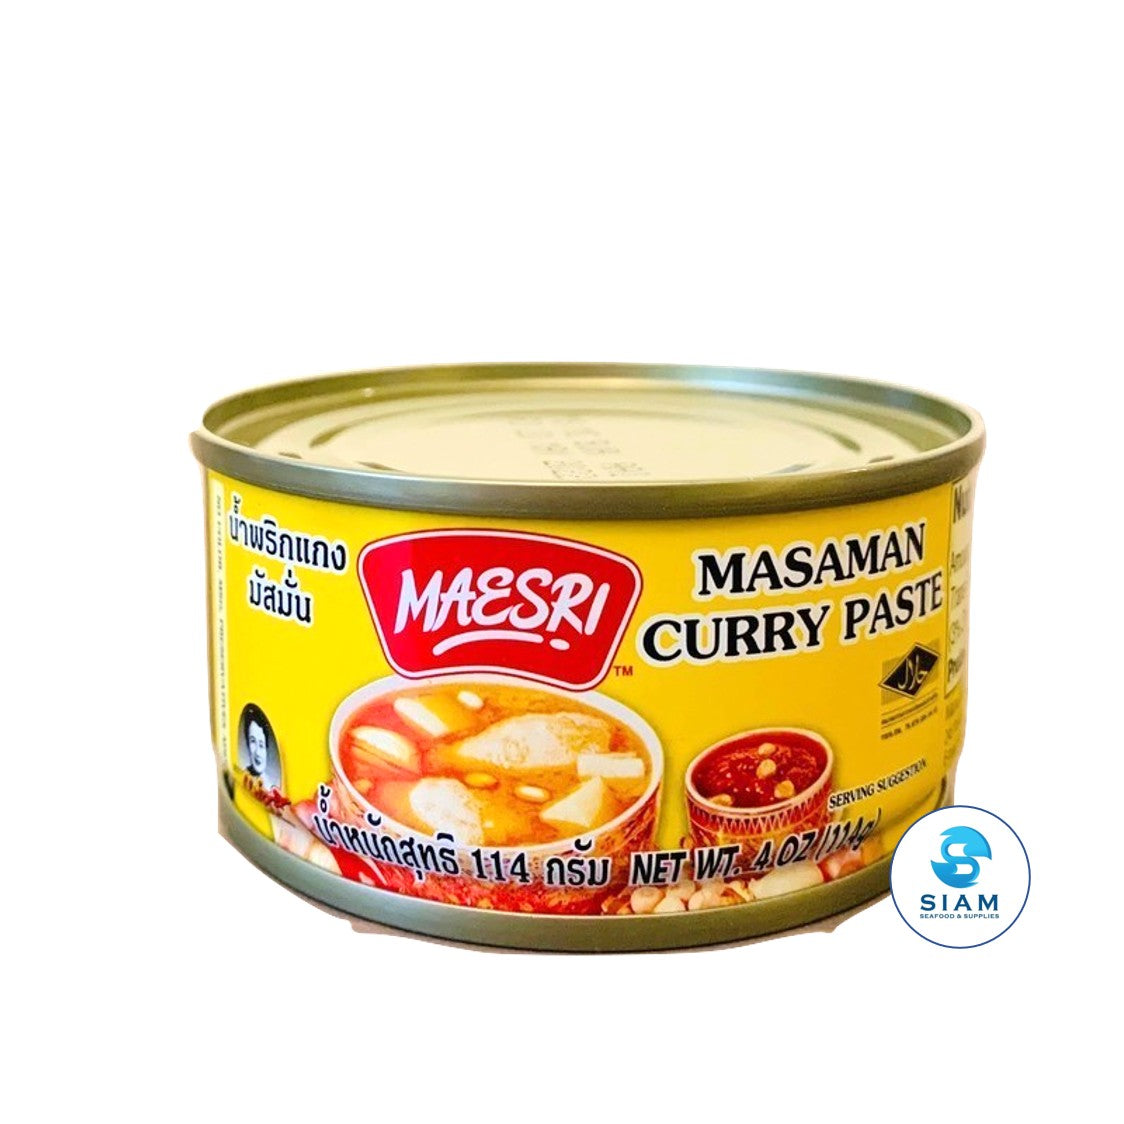 Massaman Curry Paste - Maesri (4 oz-Net Wt 5.4 oz) น้ำพริกแกงมัสมั่น แม่ศรี shippable MaeSri